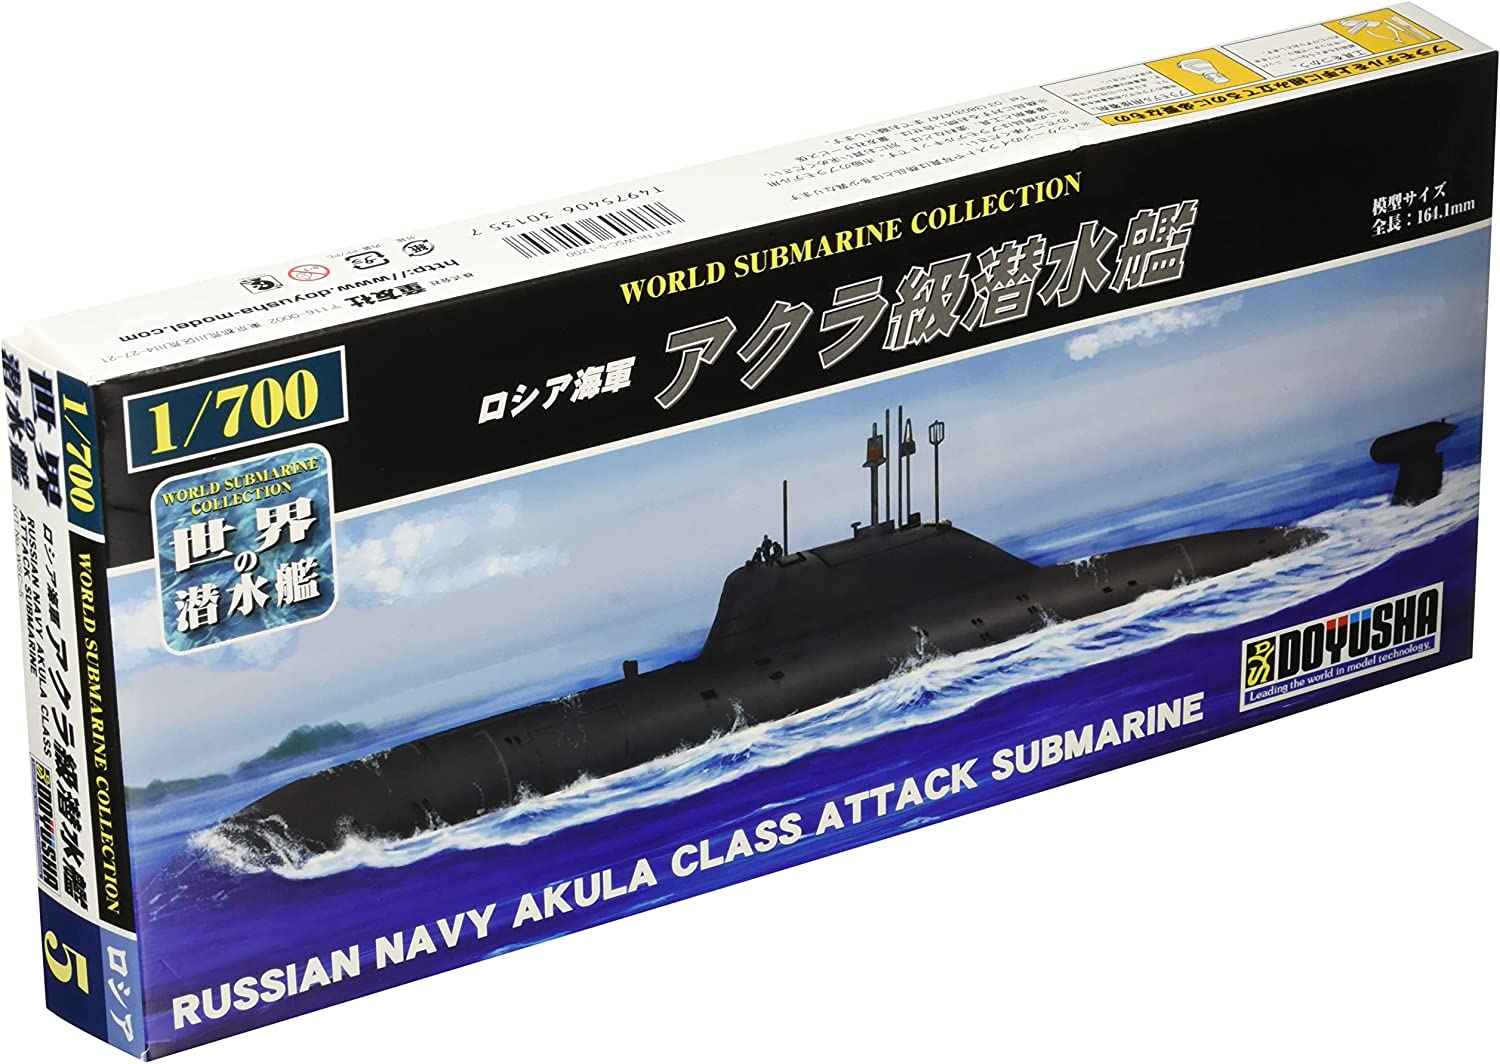 WSC-5 Russian Navy Akula class submarine